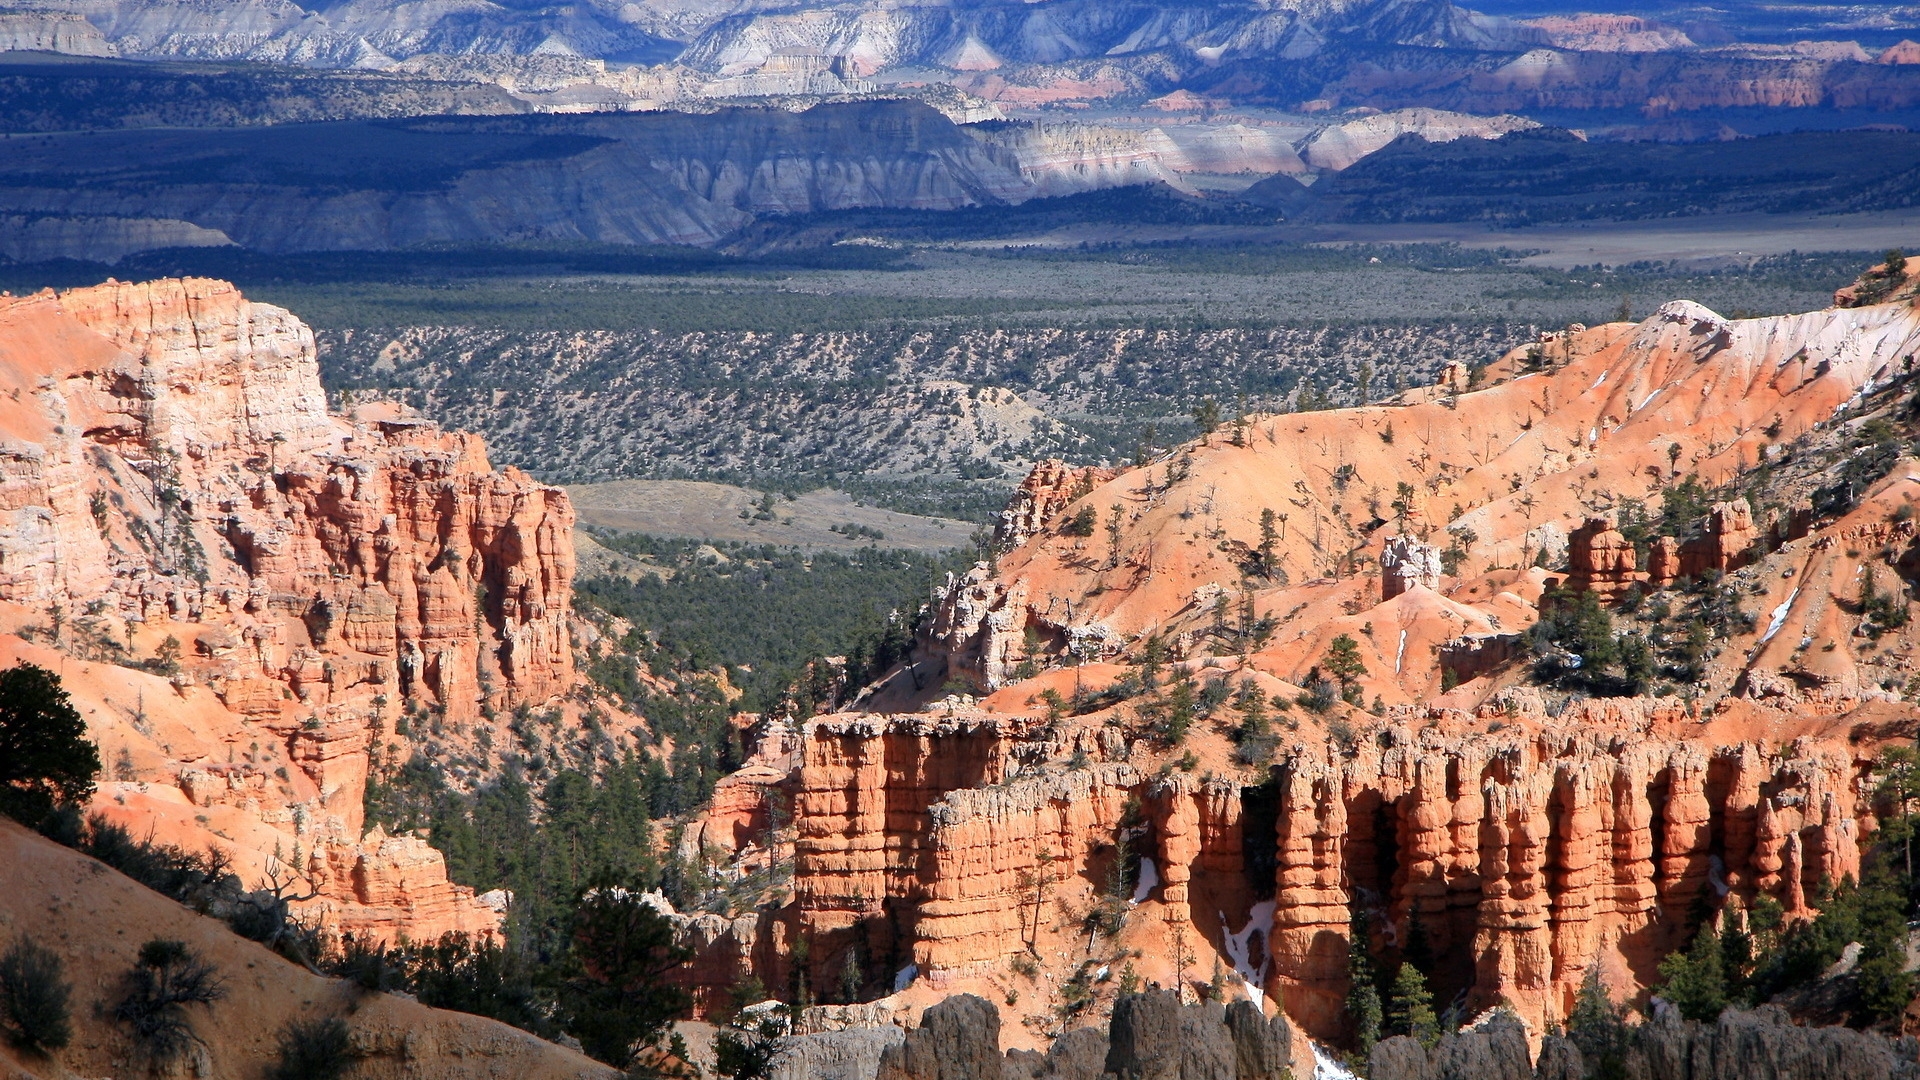 Colorado Canyon View for 1920 x 1080 HDTV 1080p resolution